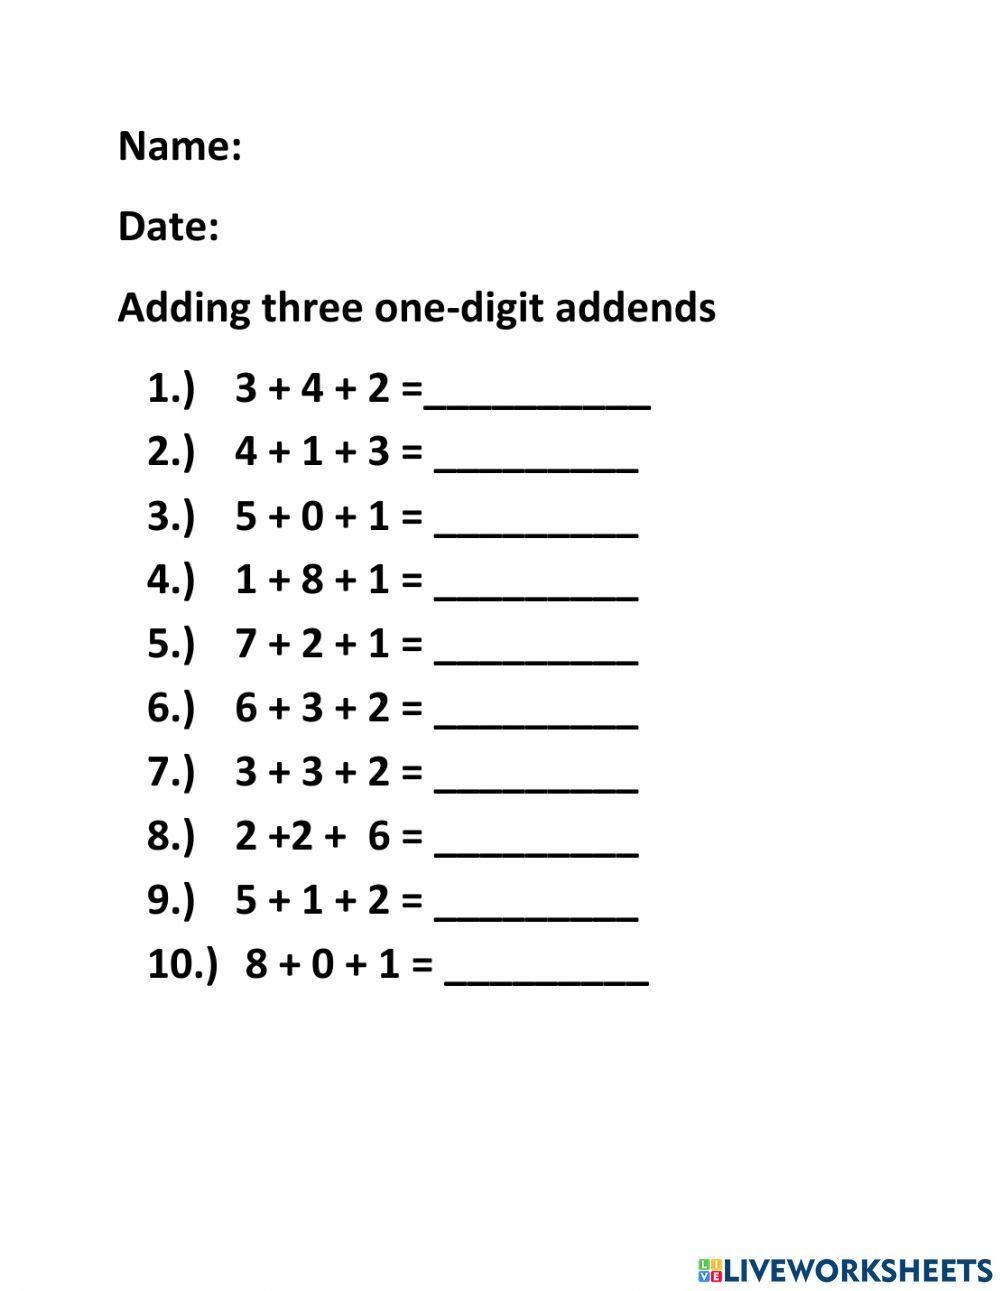 Adding three one-digit addends